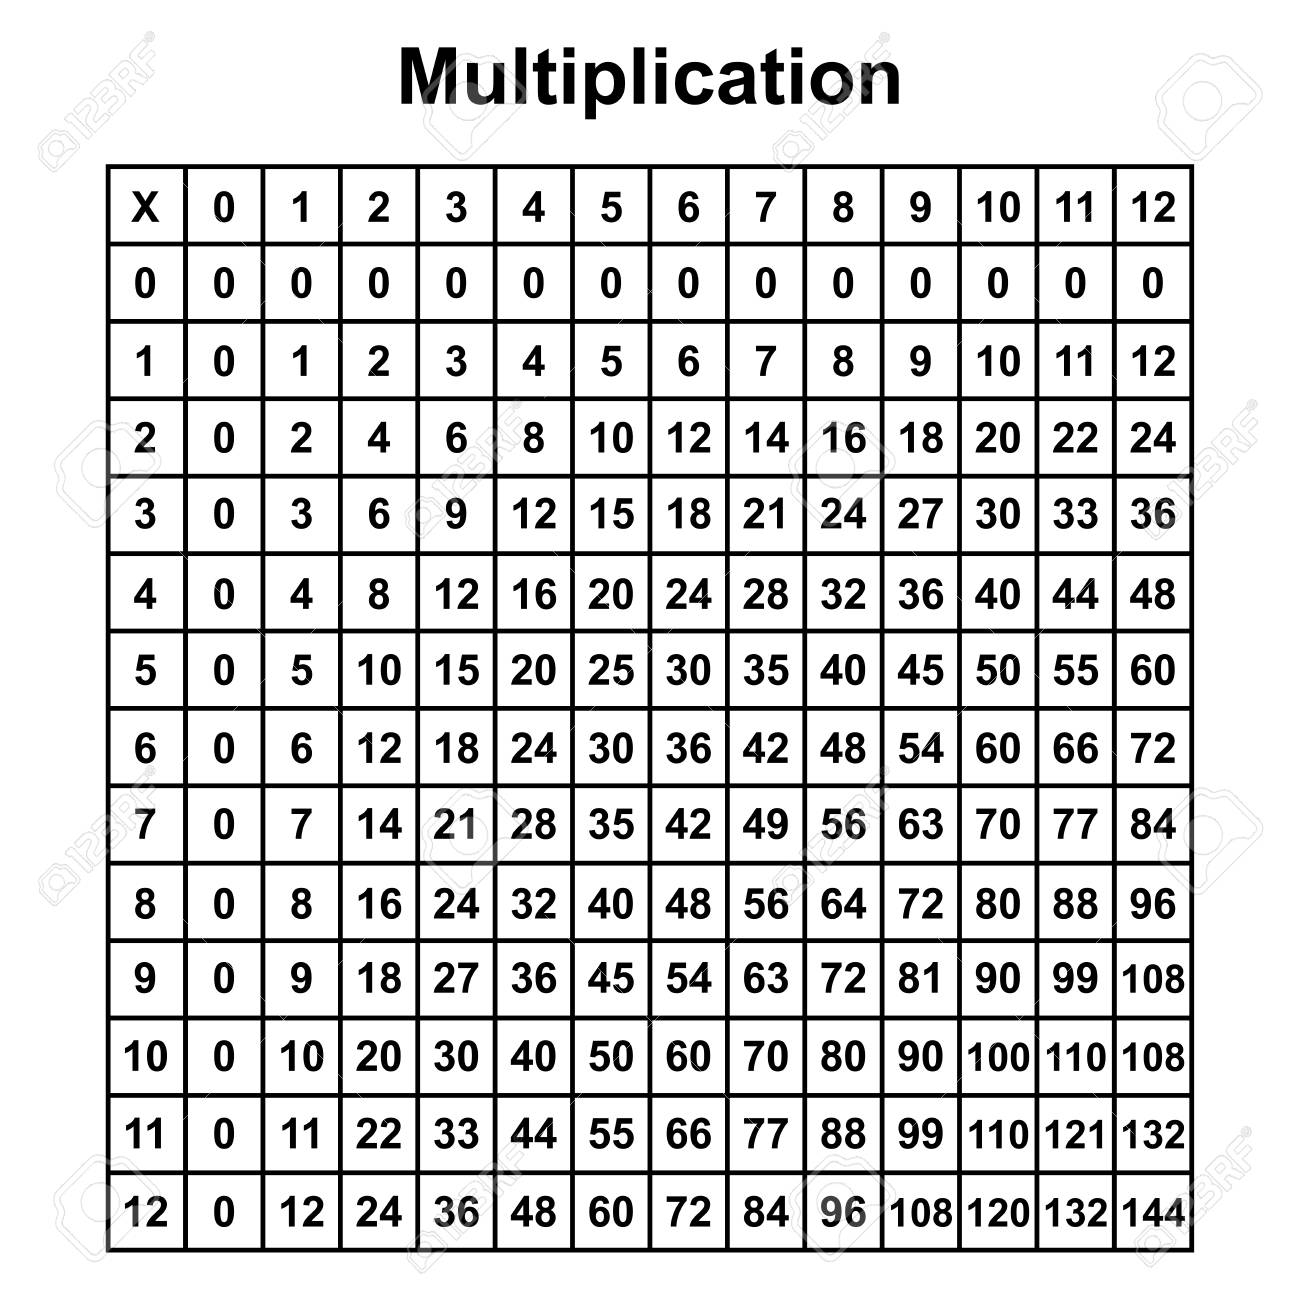 printable-multiplication-table-20-20-printablemultiplication